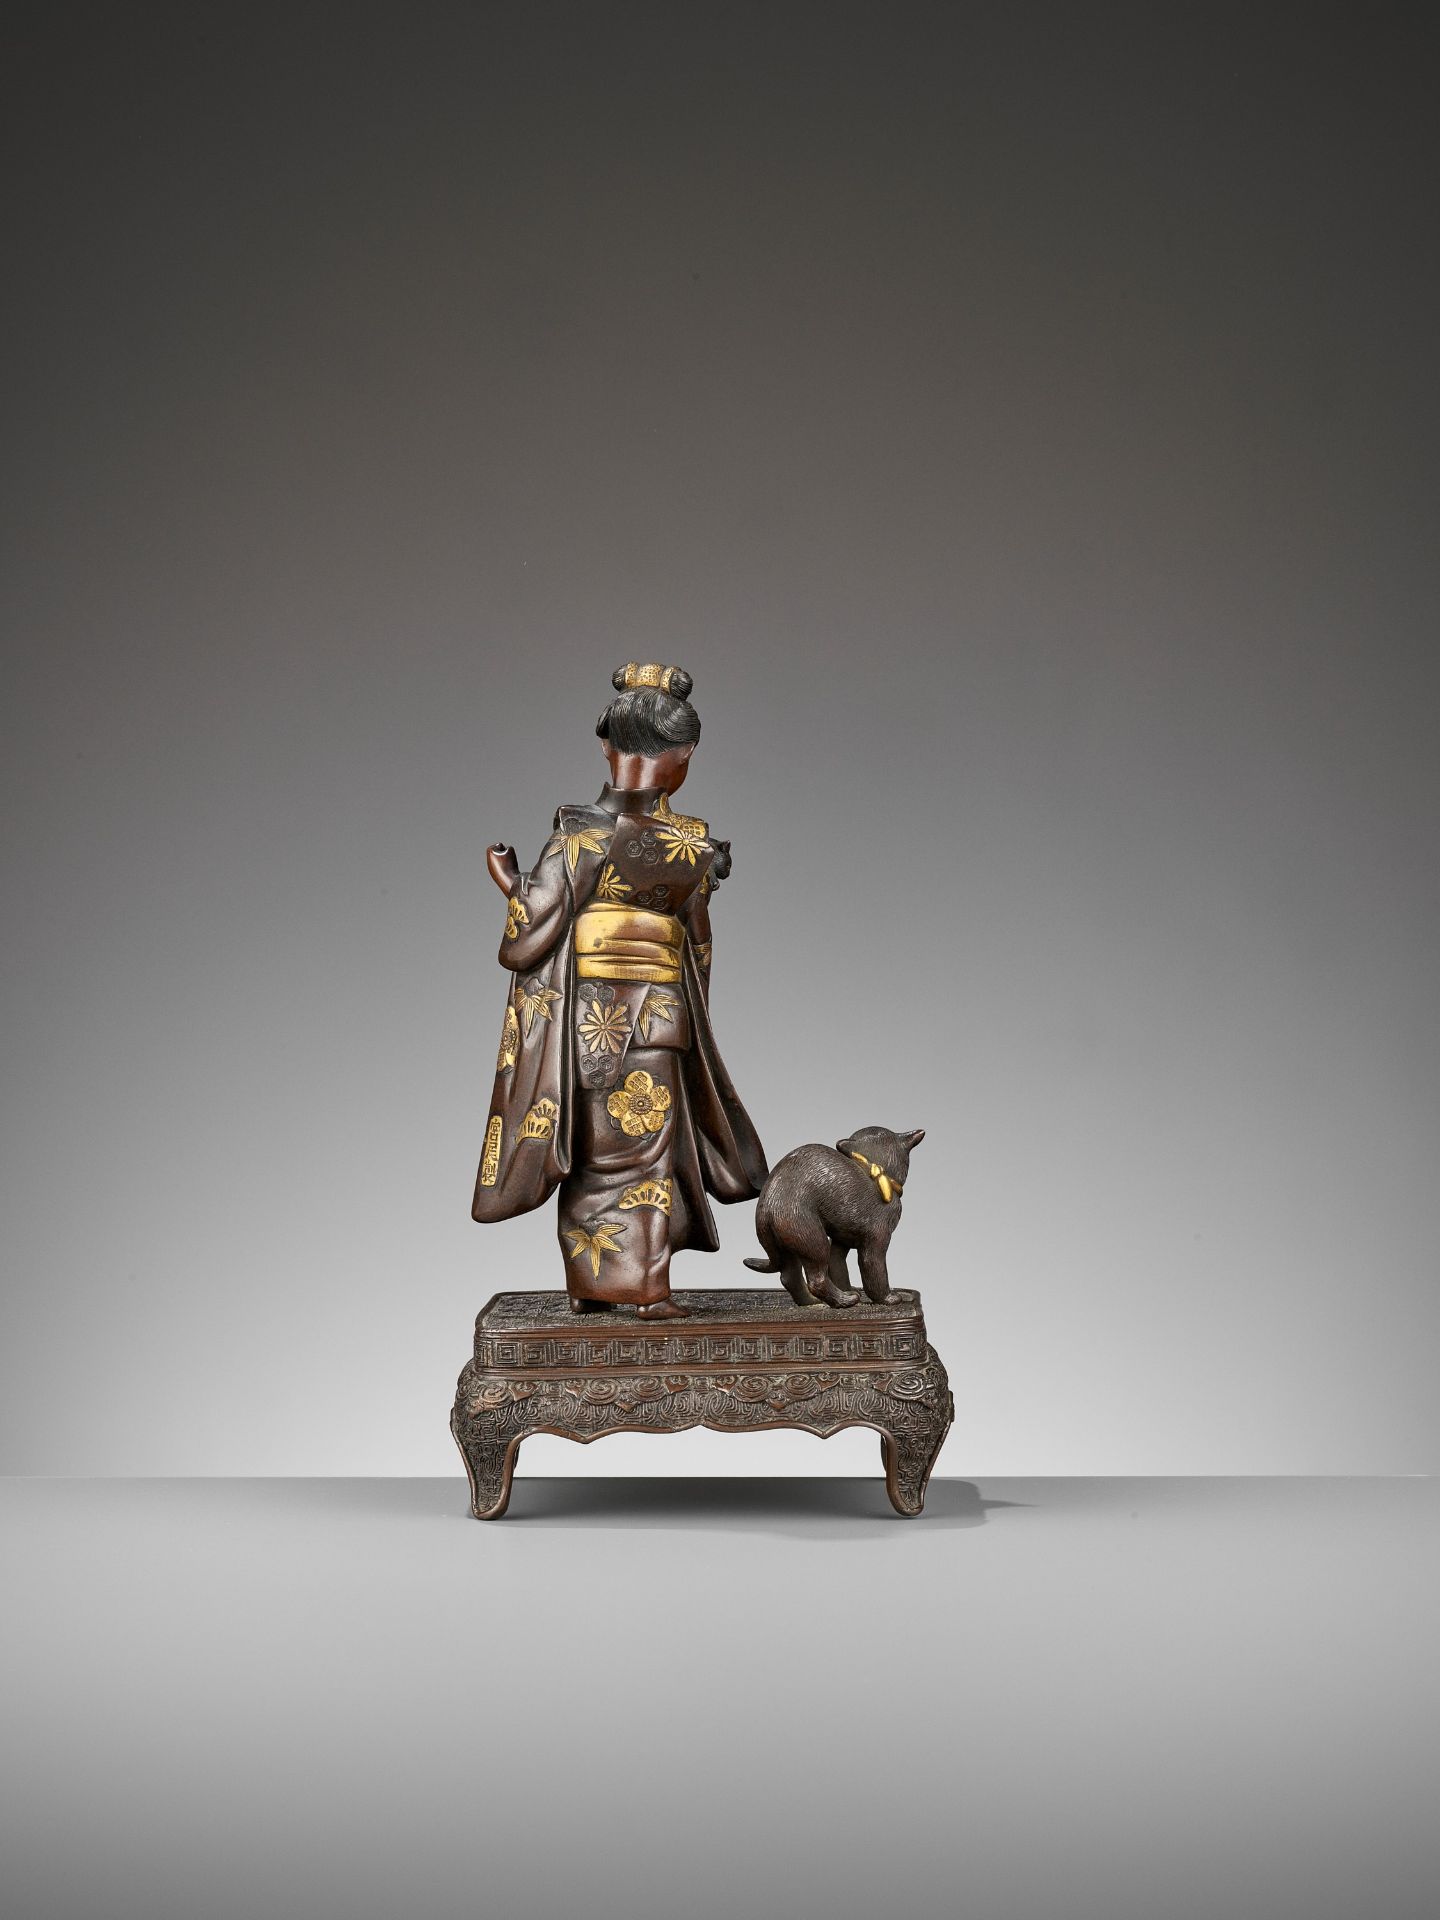 MIYAO: A RARE GOLD-INLAID BRONZE OKIMONO OF A LADY WITH CATS - Image 9 of 14